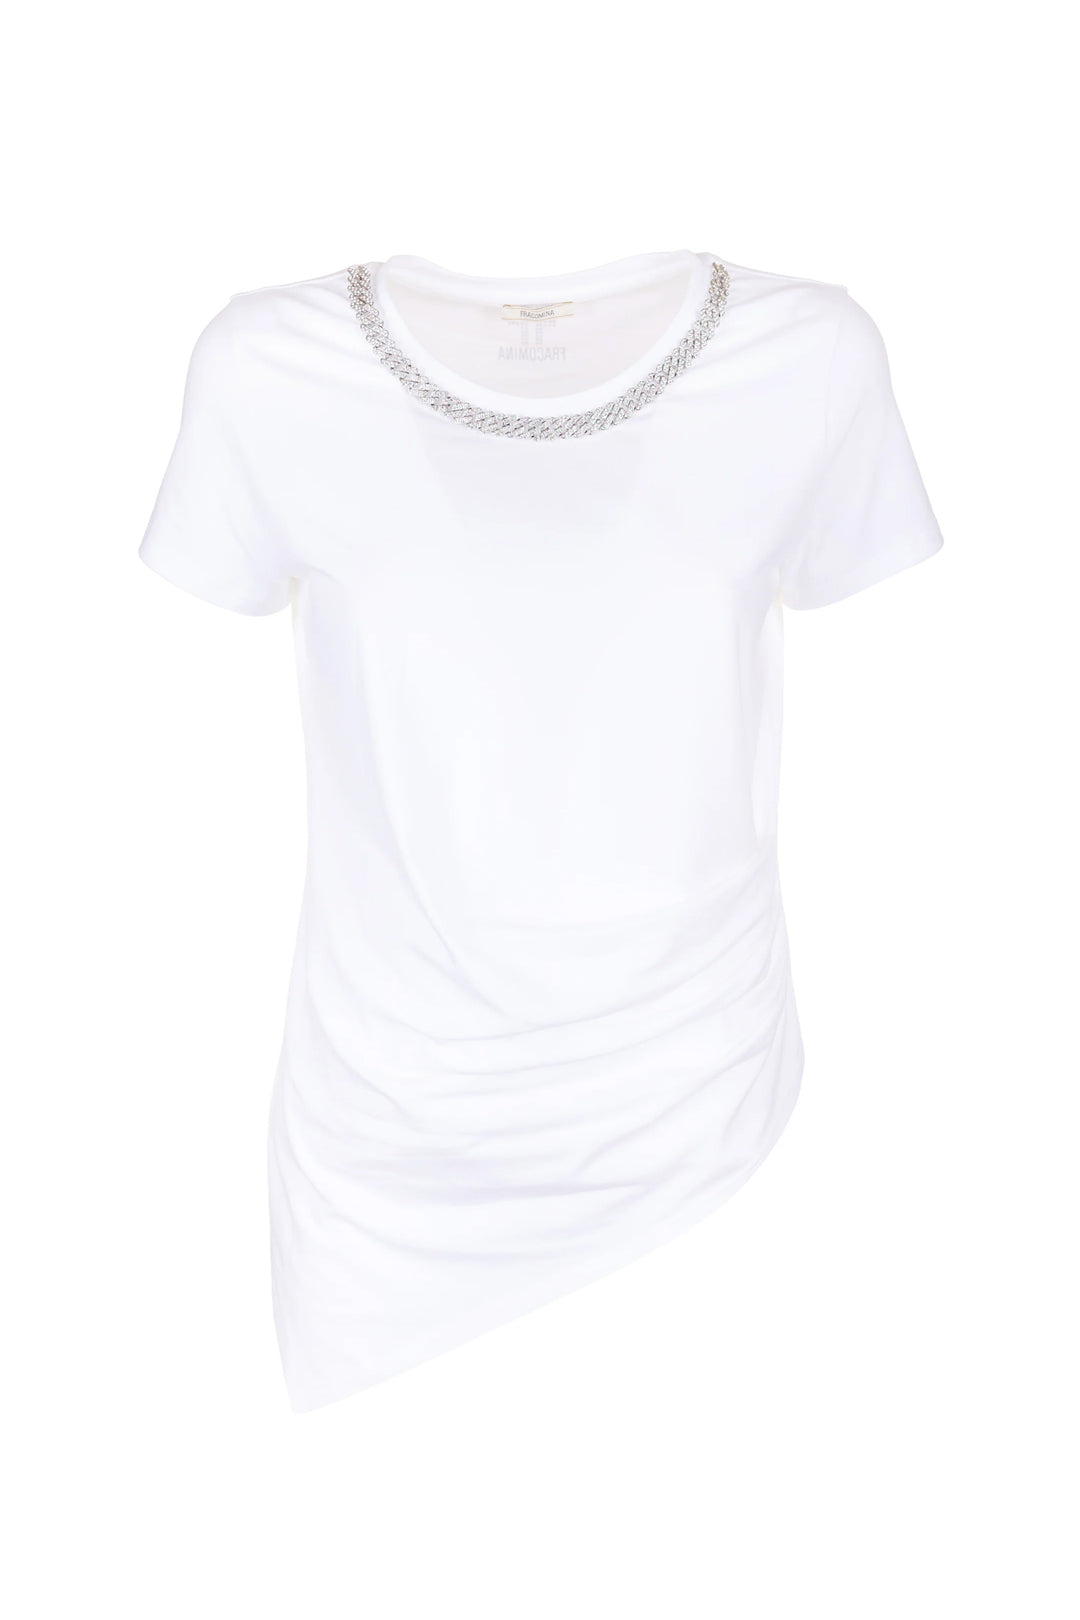 FRACOMINA T-shirt regular bianca in jersey stretch con catena applicata - Mancinelli 1954